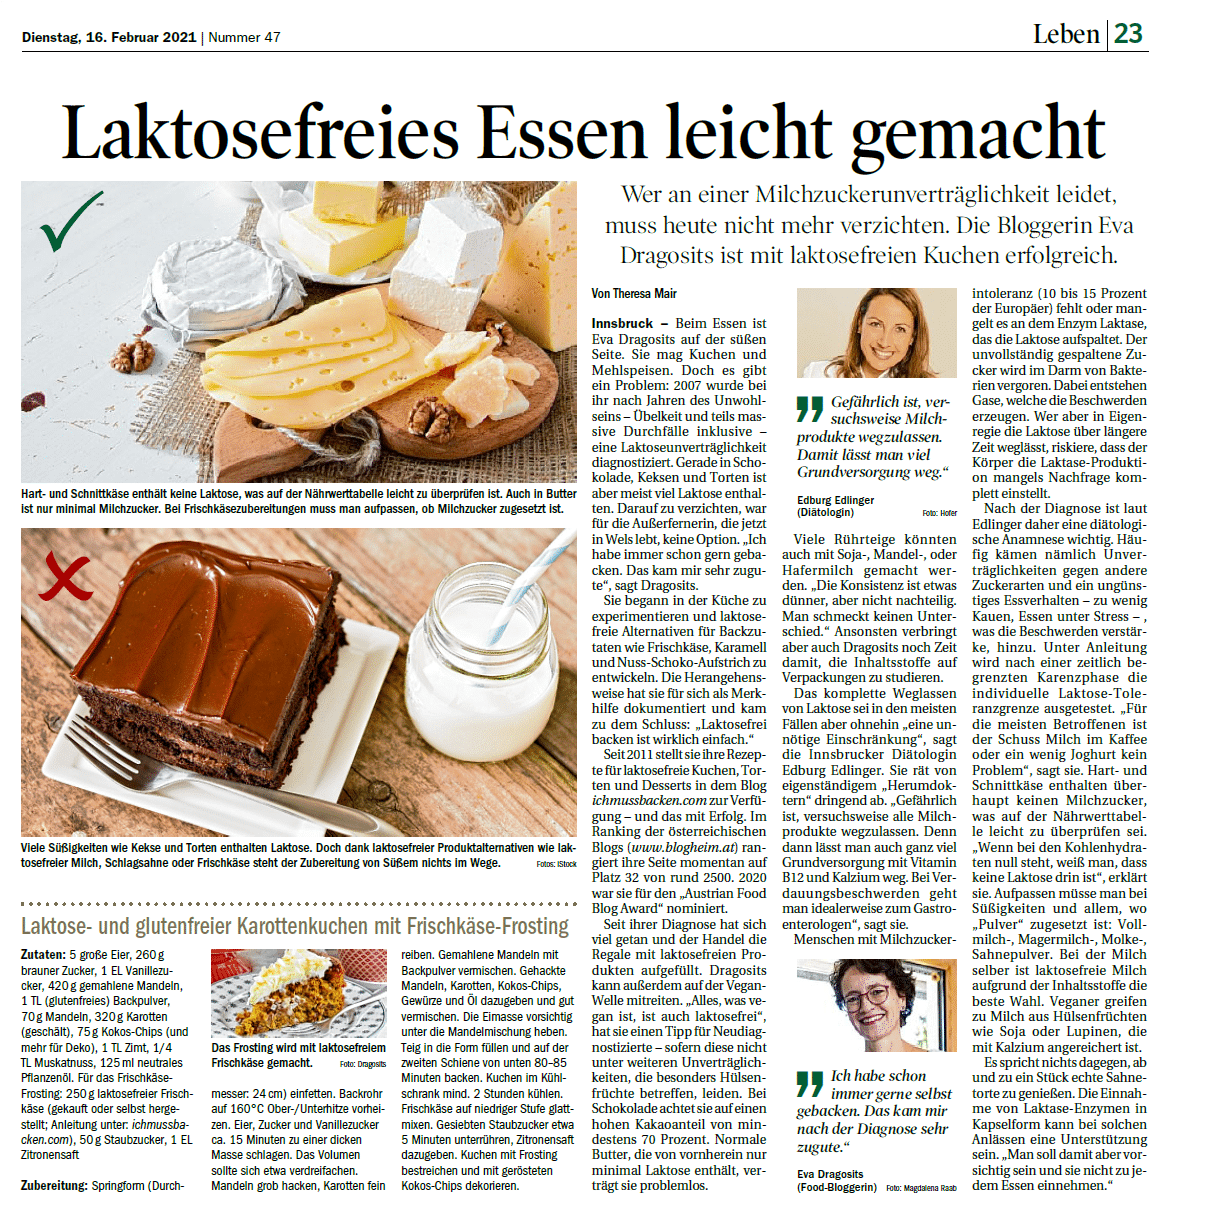 Laktosefreies Essen leicht gemacht, Tiroler Tageszeitung